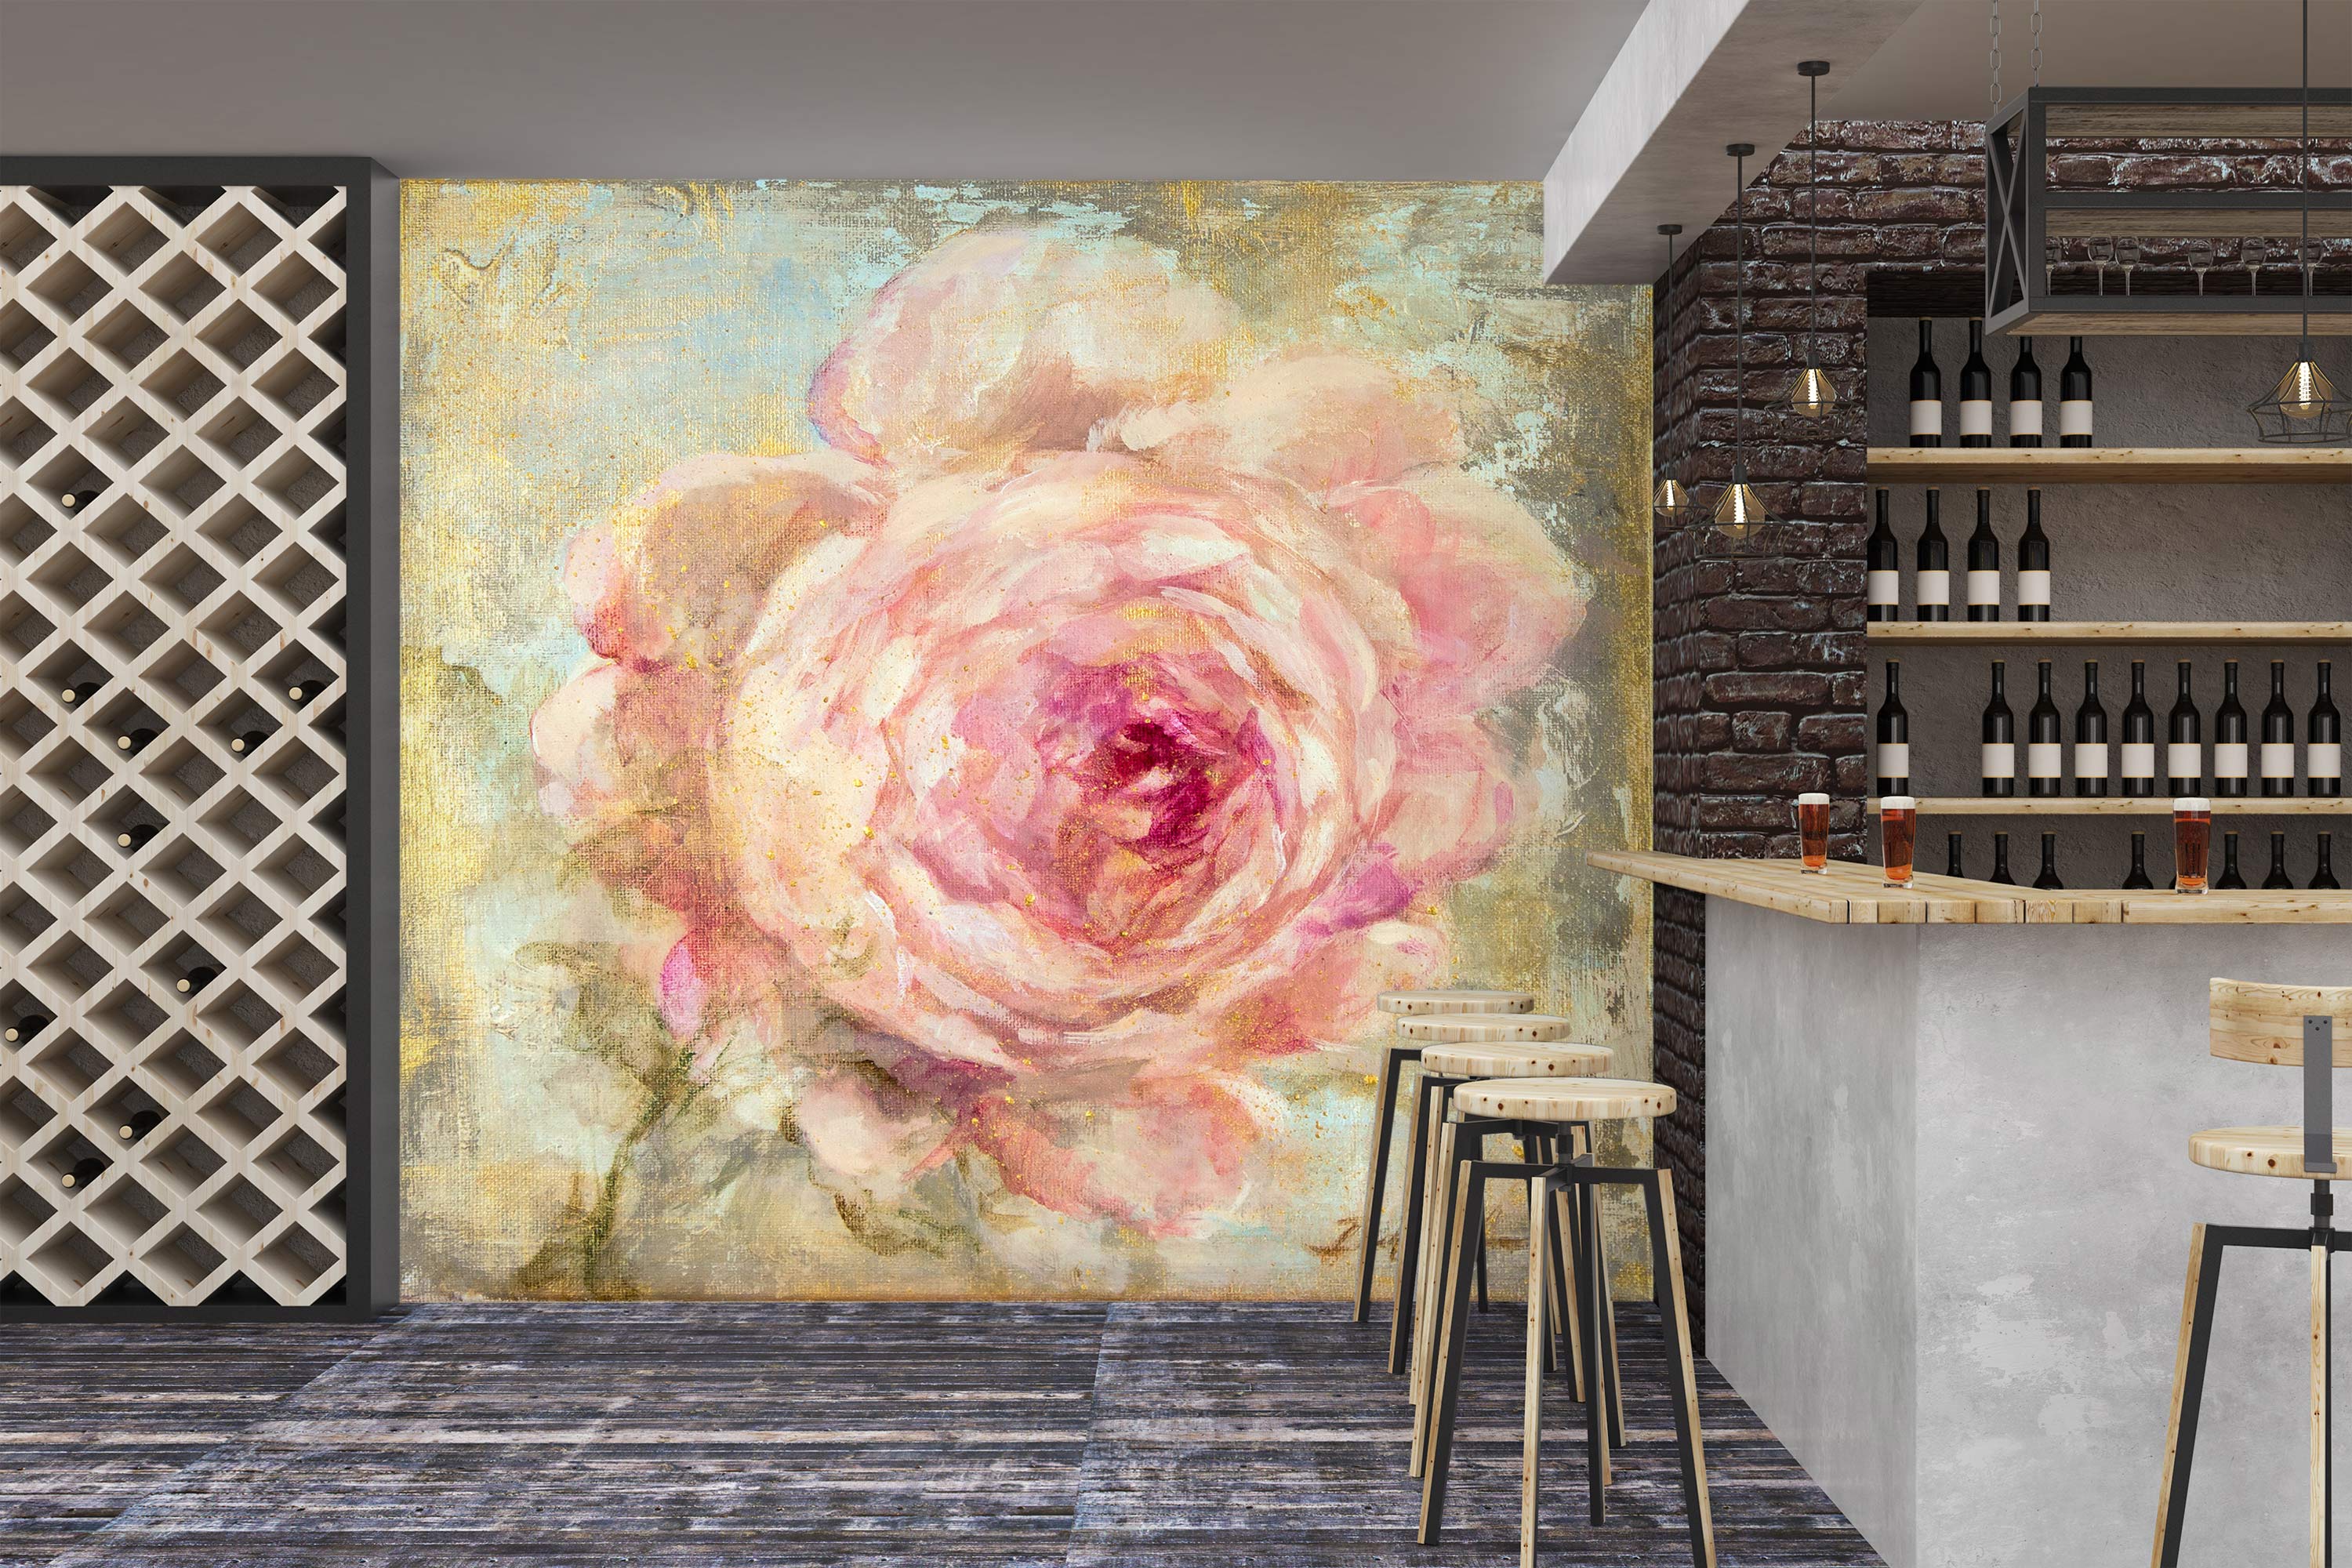 3D Rose Pink Flowers 3188 Debi Coules Wall Mural Wall Murals